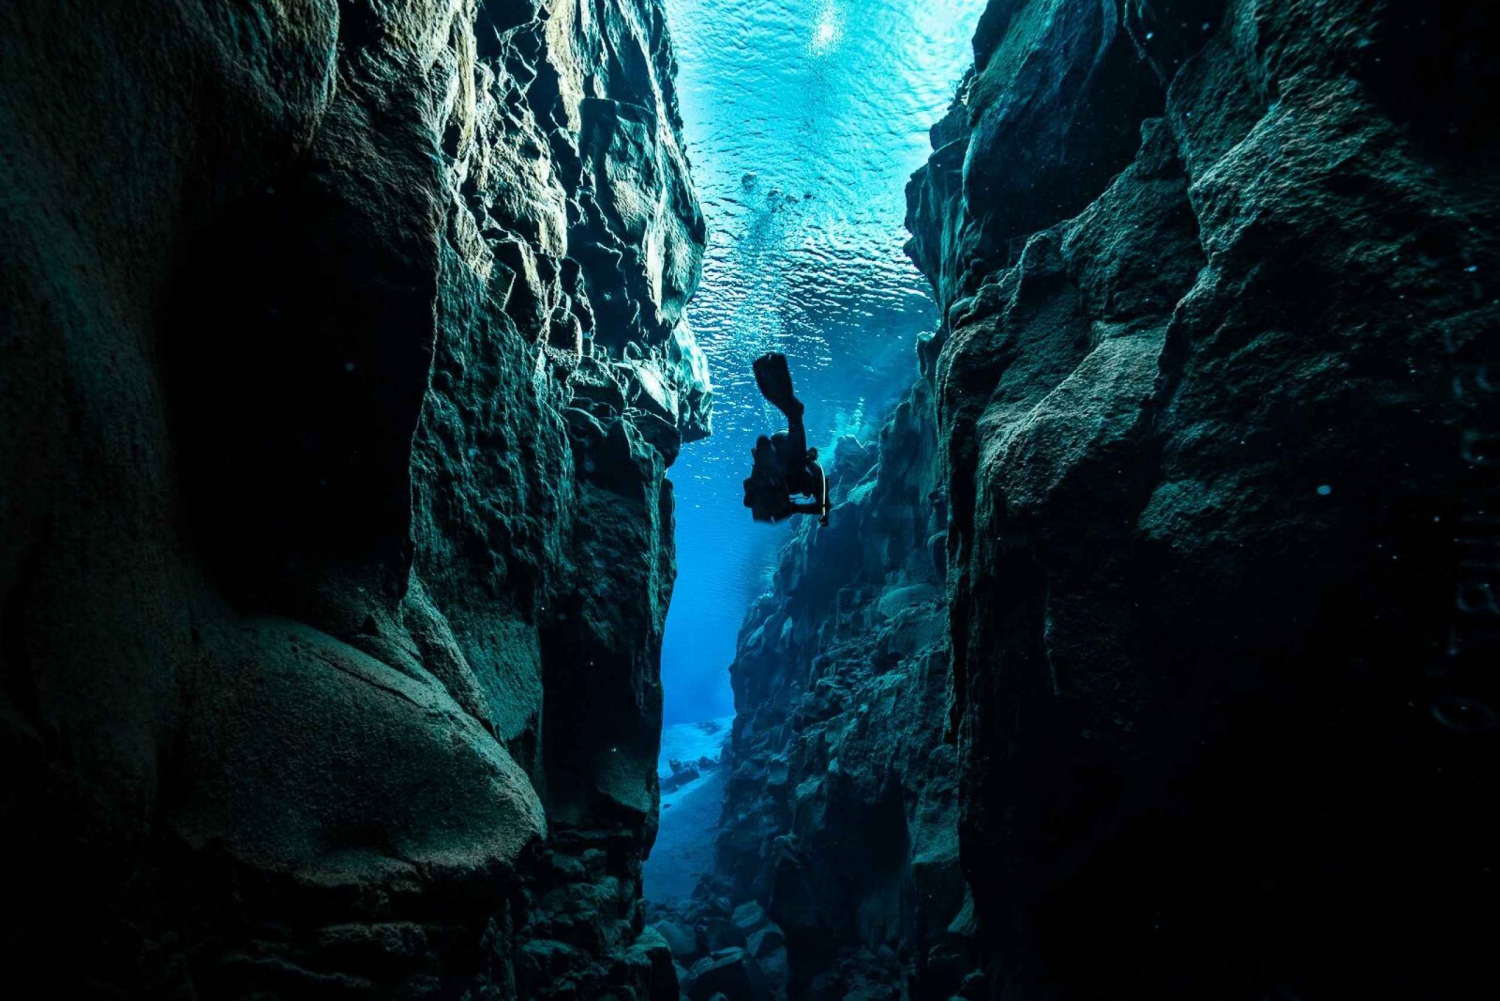 Reykjavik: Diving in Silfra with Underwater Photos